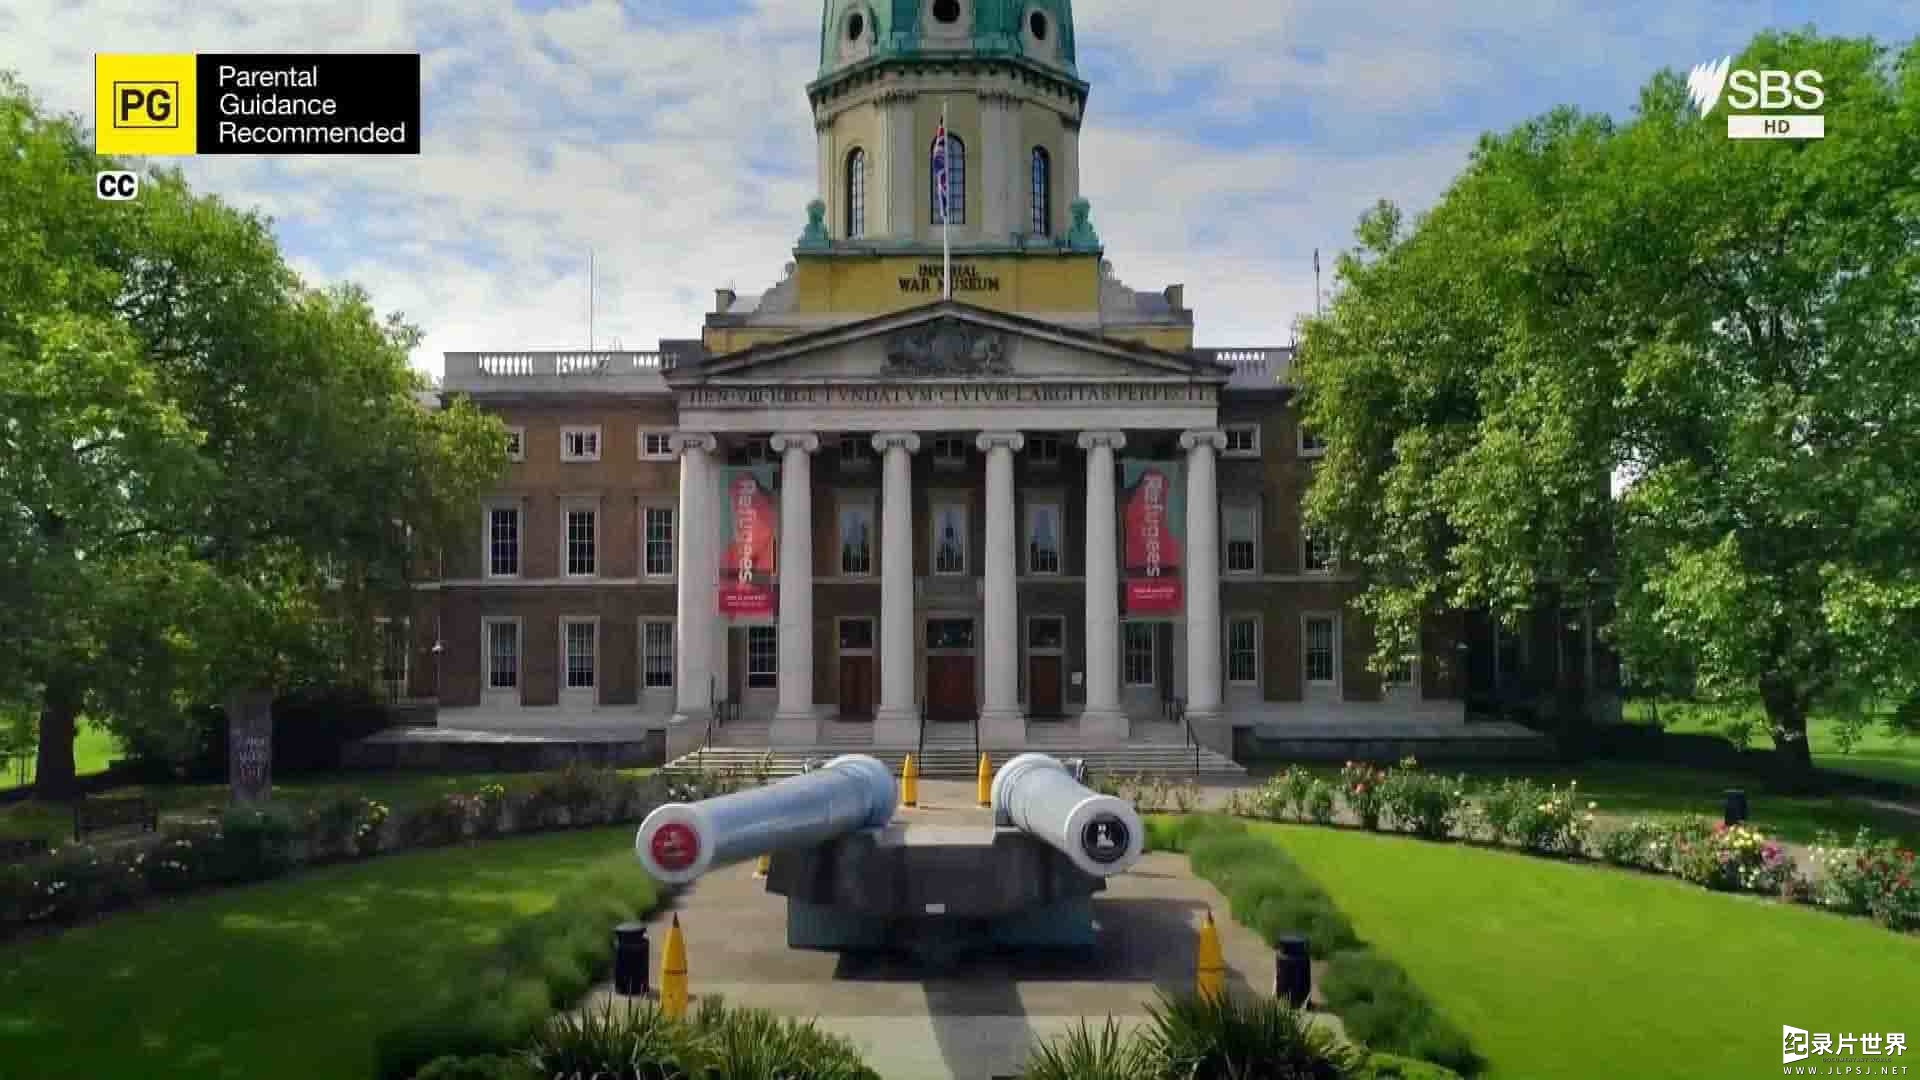 SBS纪录片《帝国战争博物馆的秘密 Secrets of the Imperial War Museum 2022》全6集